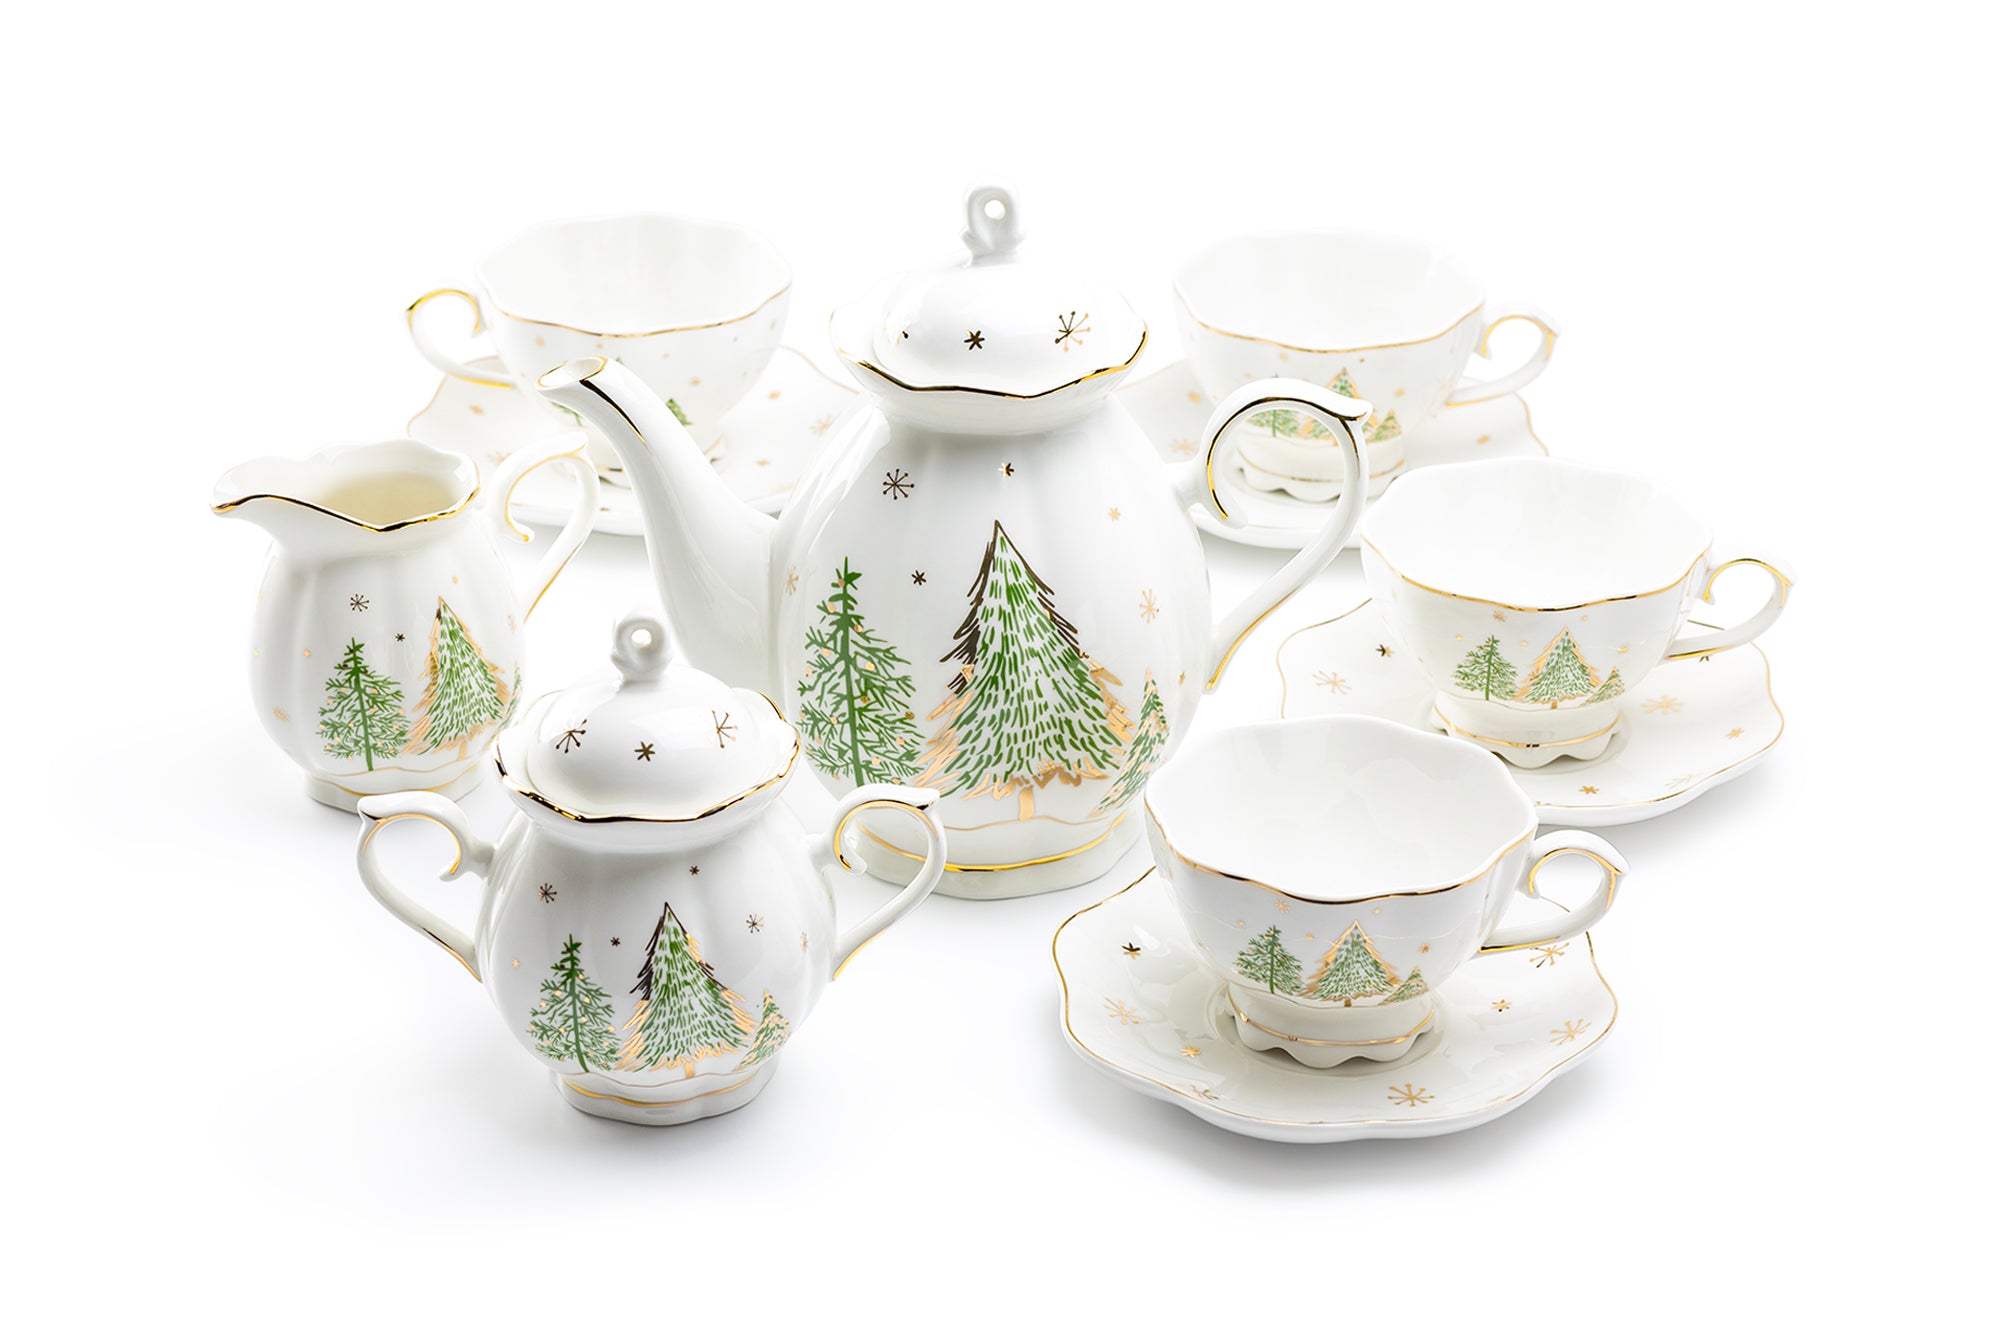 Christmas tree tray 30 x 25 cm, new bone china, EGAN - EGAN - EGAN  porcelain and ceramics - by Manufacturers or popular decors -  Dumporcelanu.cz - český a evropský porcelán, sklo, příbory